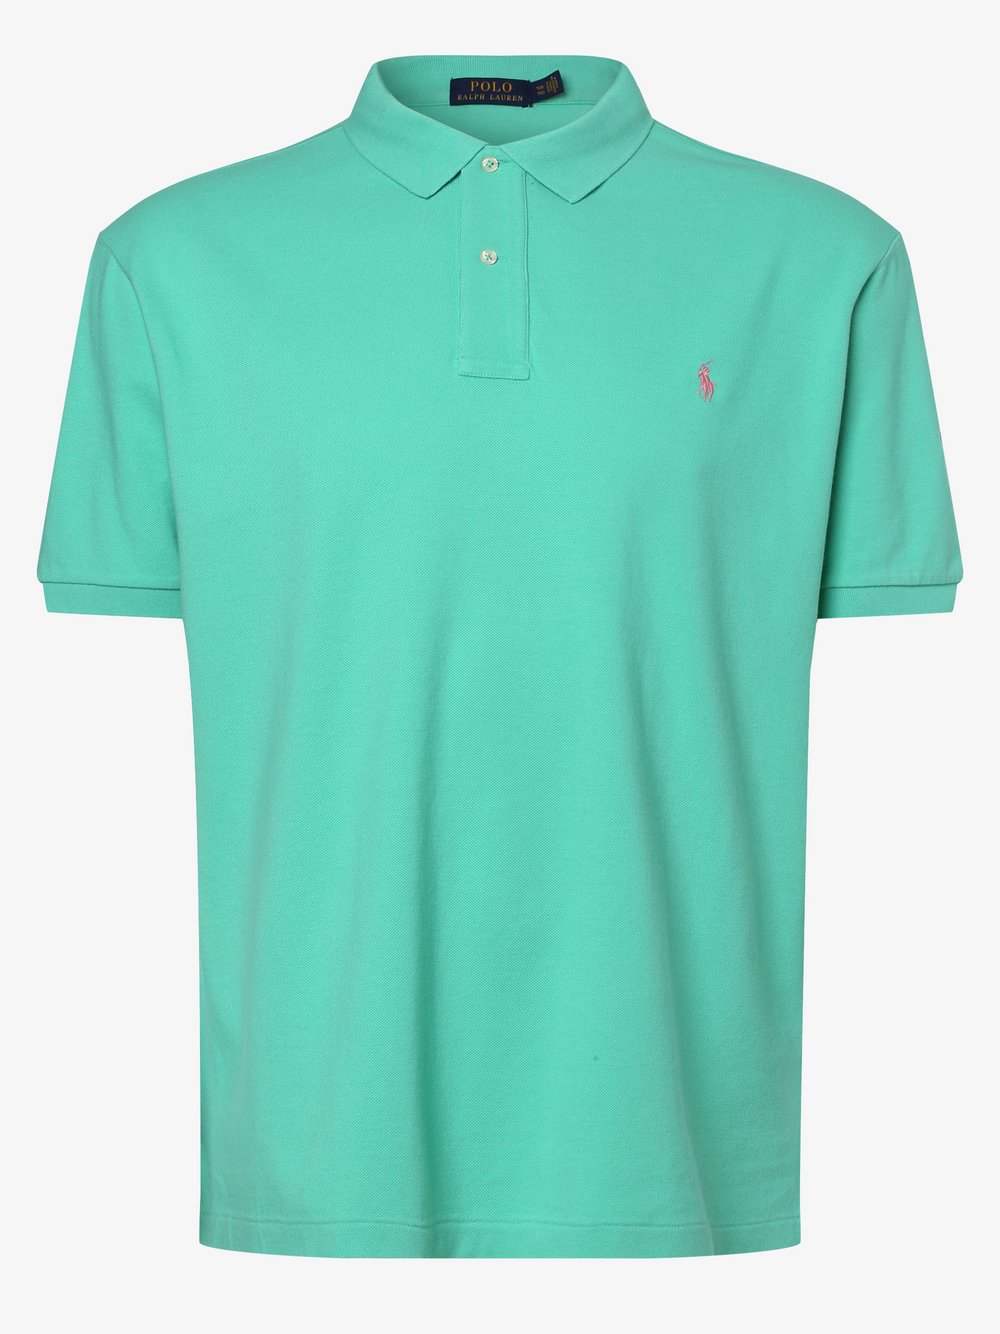 Polo Ralph Lauren - Męska koszulka polo – duże rozmiary, zielony